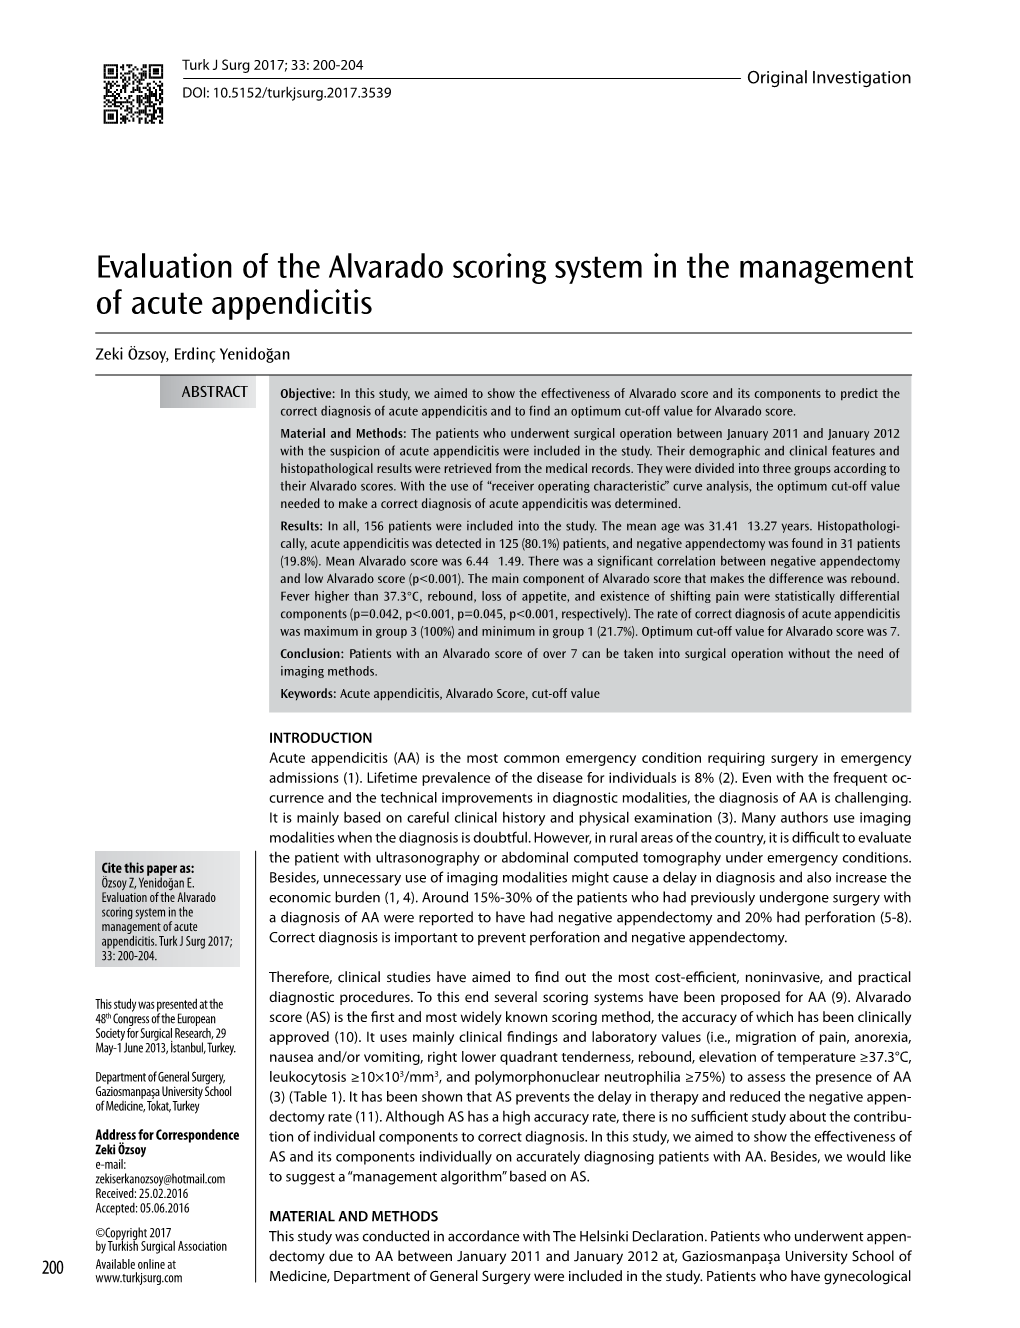 Evaluation of the Alvarado Scoring System in the Management of Acute Appendicitis